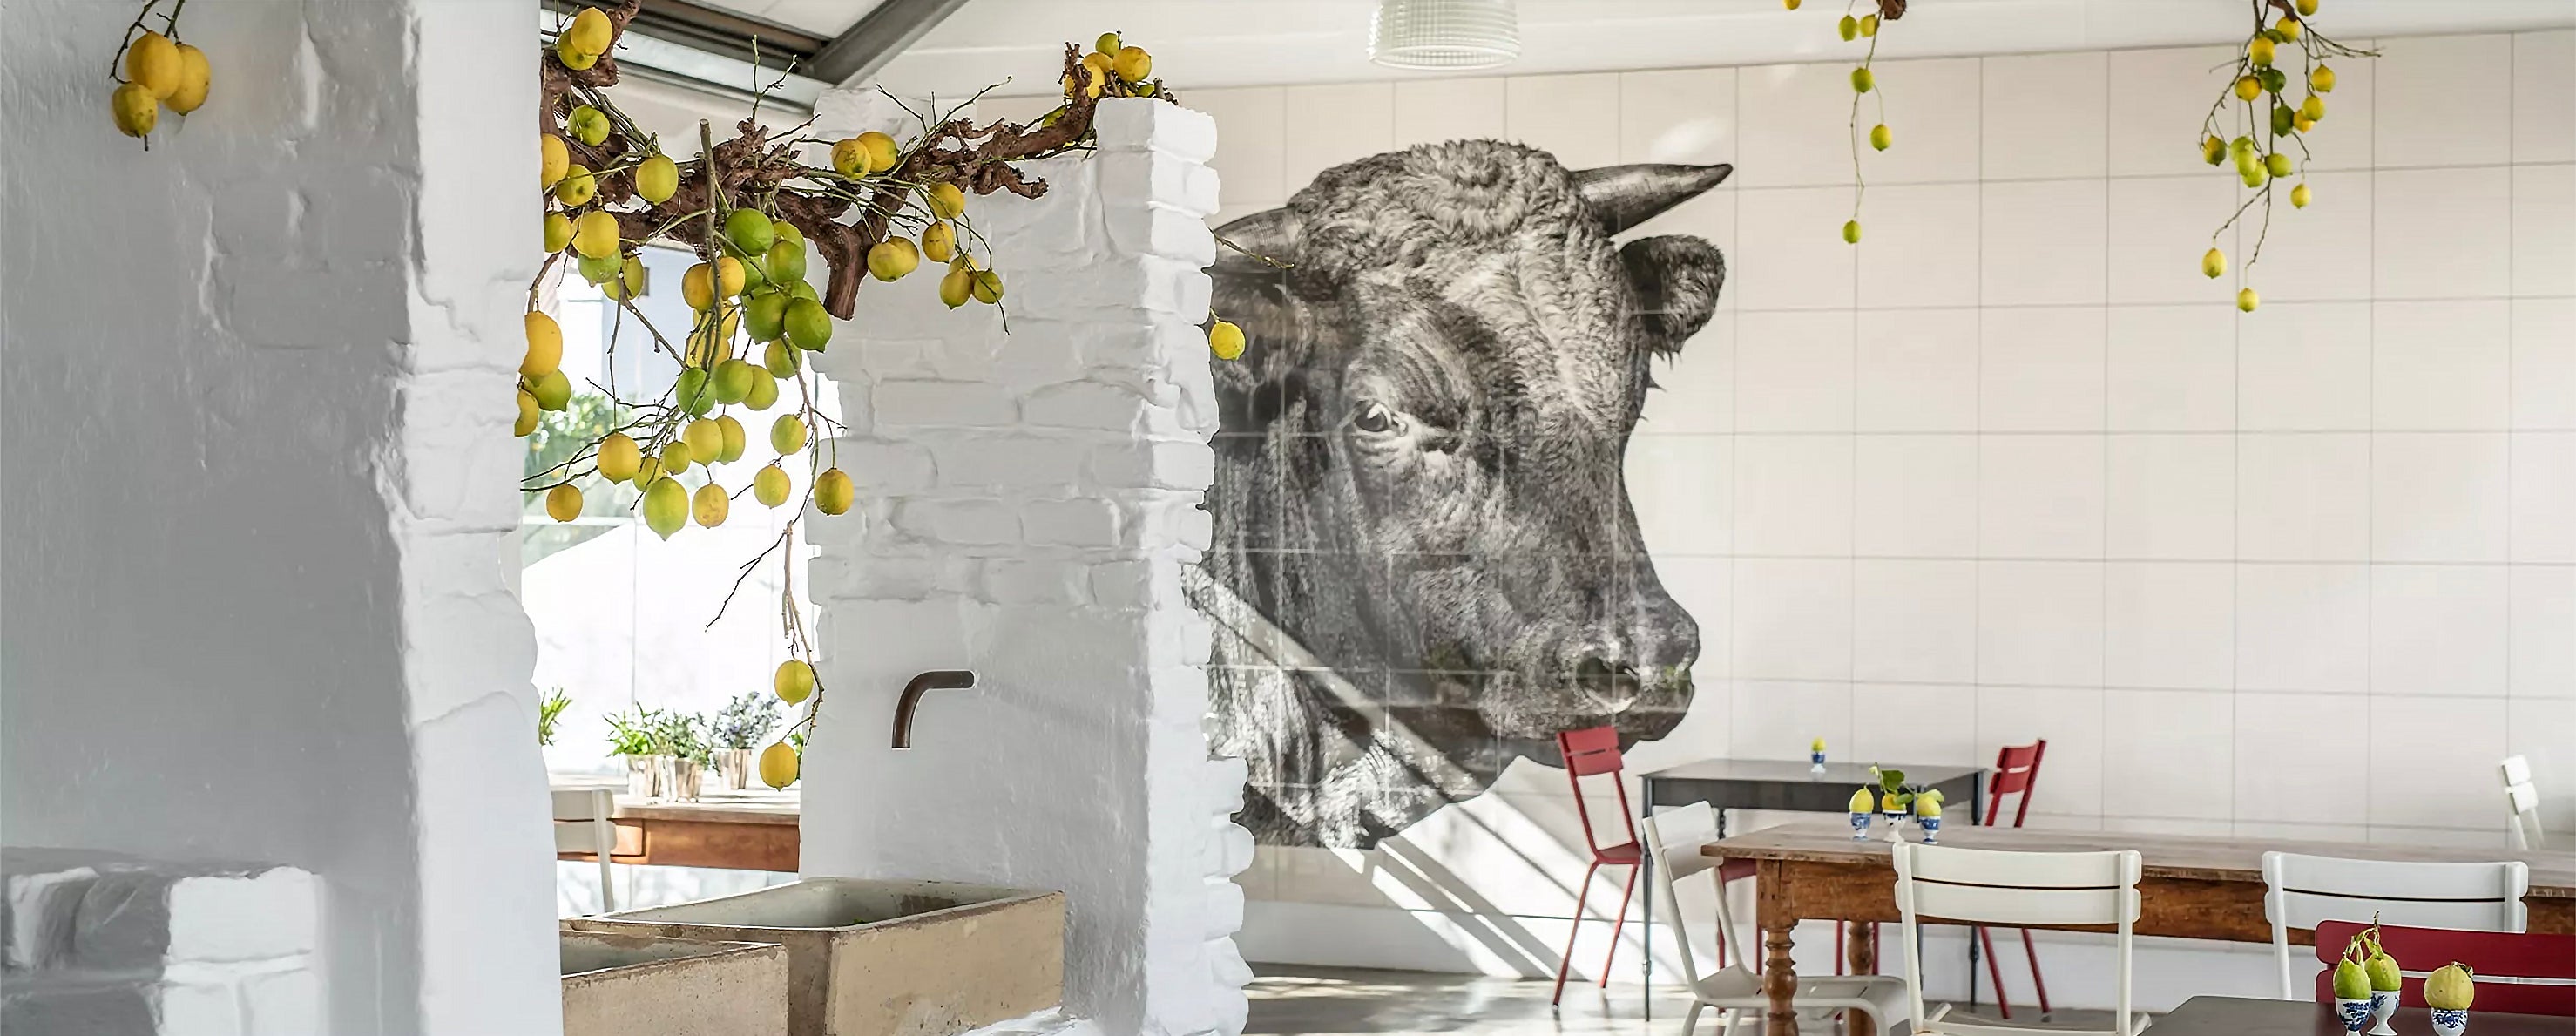 Safari Journal / Blog by Safari Fusion | Africa's Nguni cow | Winery farmhouse style at Babel restaurant, Babylonstoren / South Africa